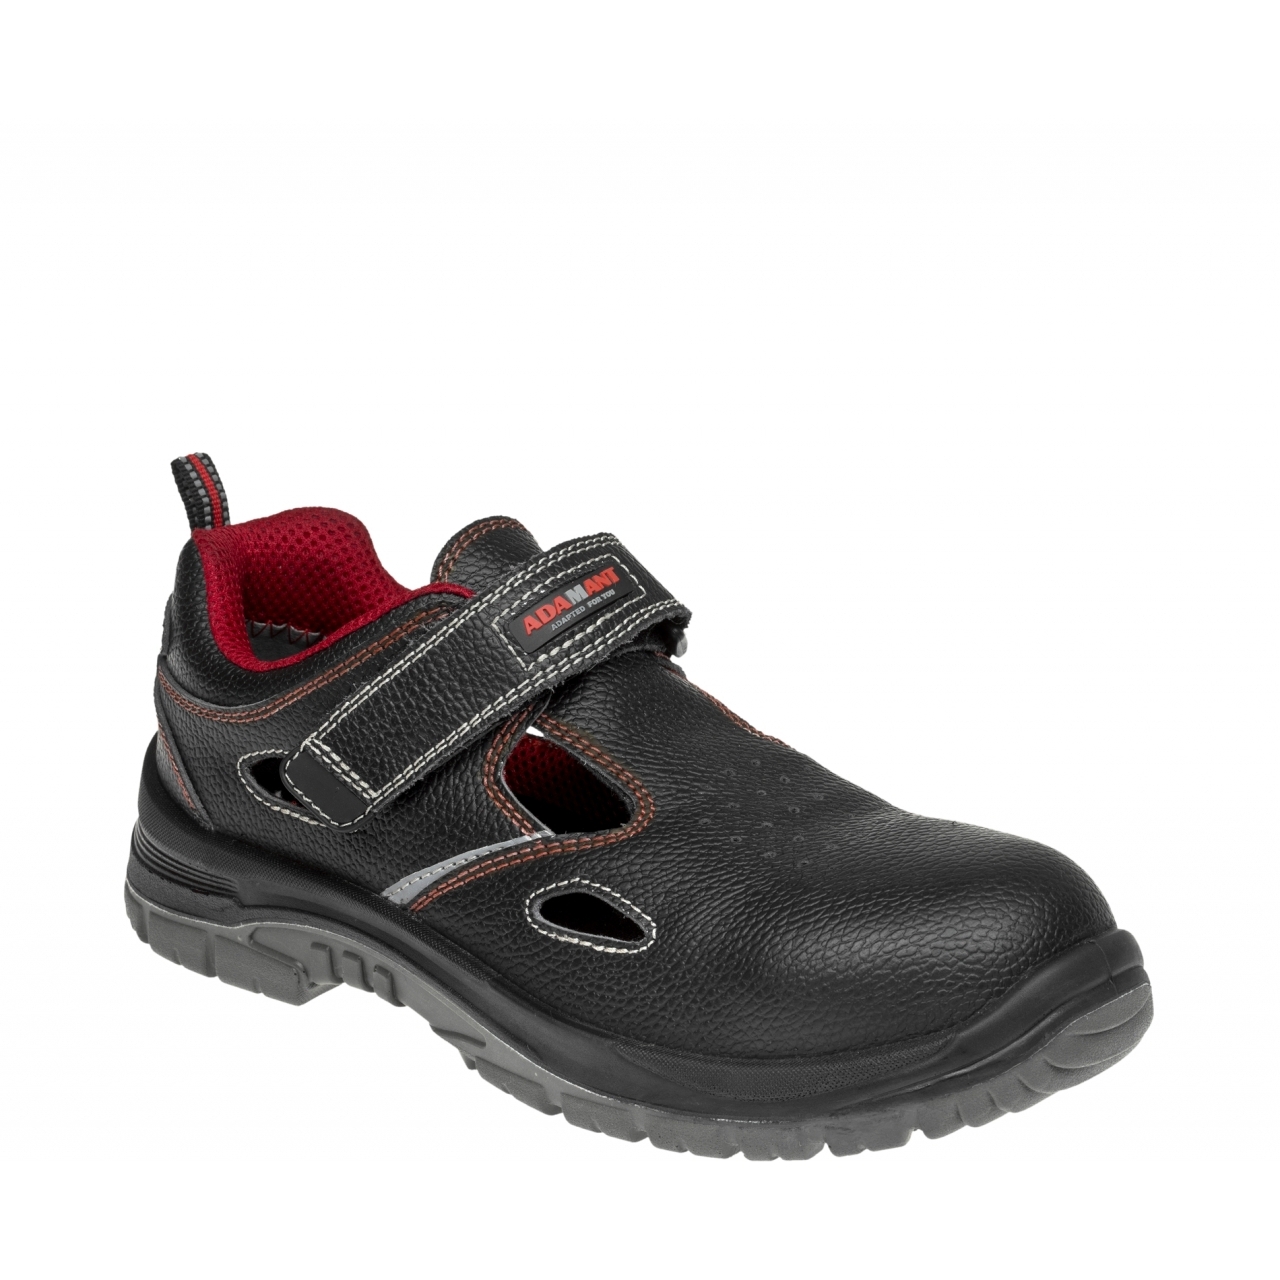 Sandále Bennon Non Metallic S1 - černé, 35